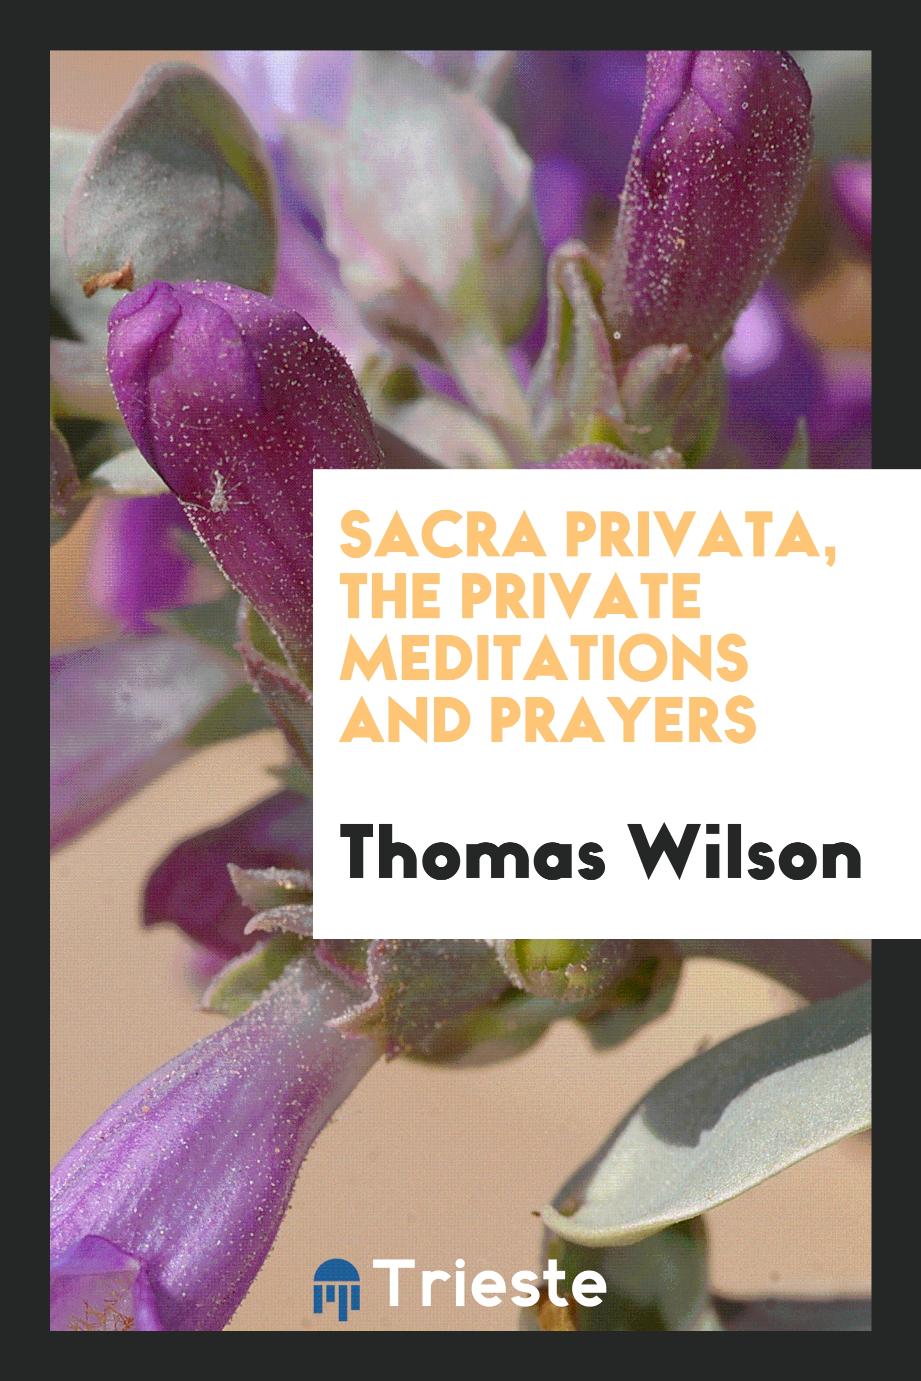 Sacra Privata, the Private Meditations and Prayers